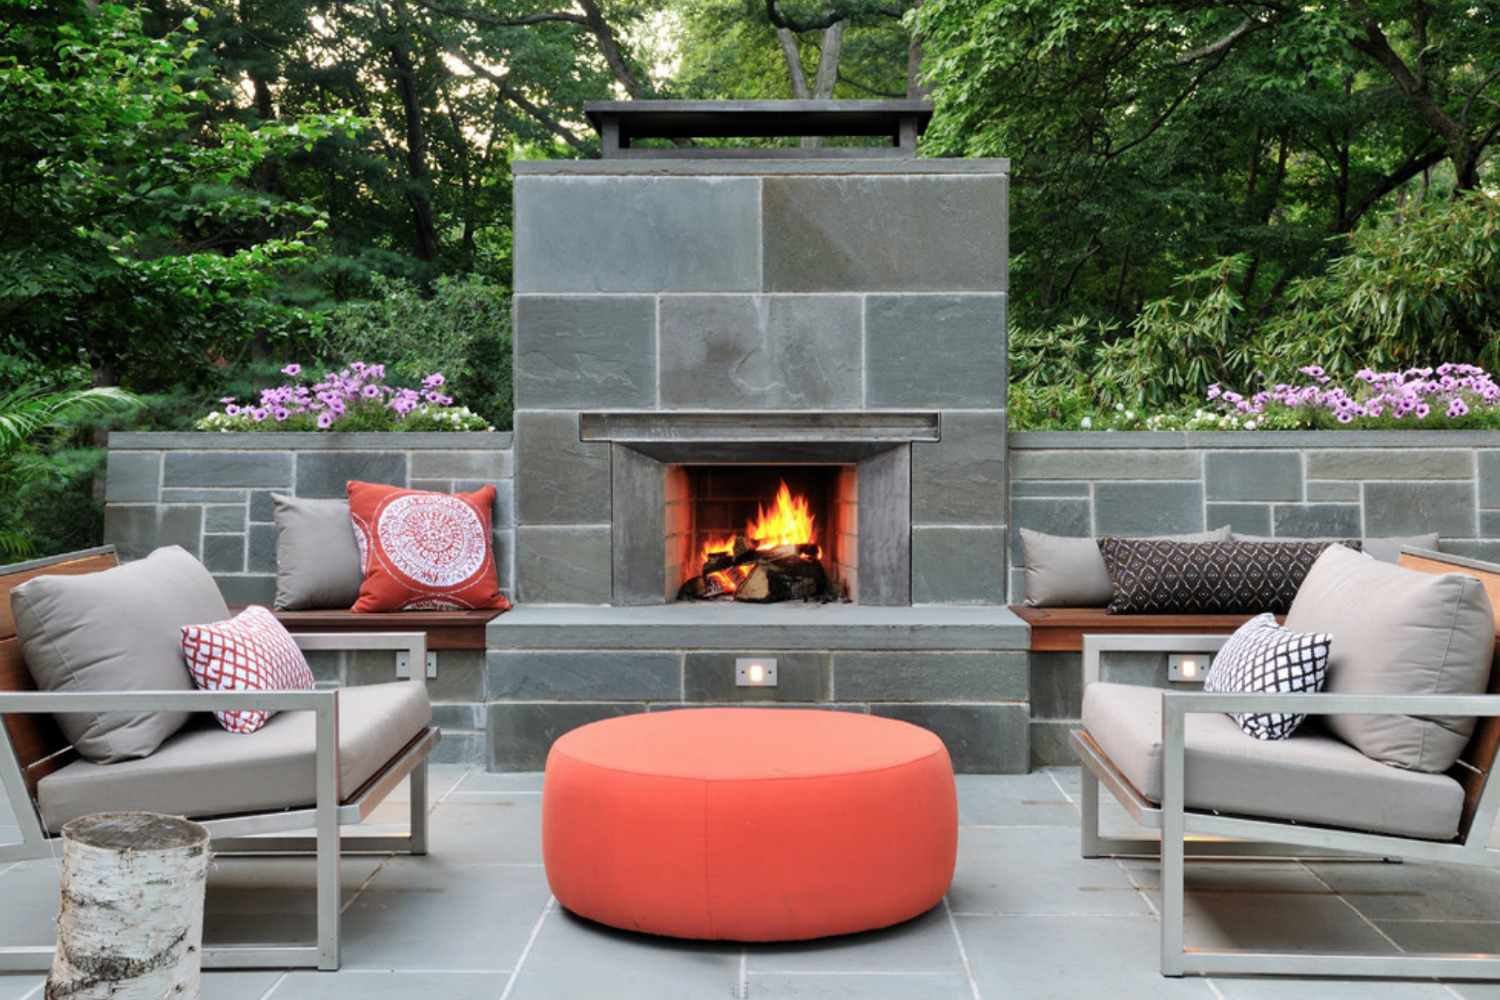 Outdoor Fireplace Ideas:13 Ways To Warm Up Your Backyard